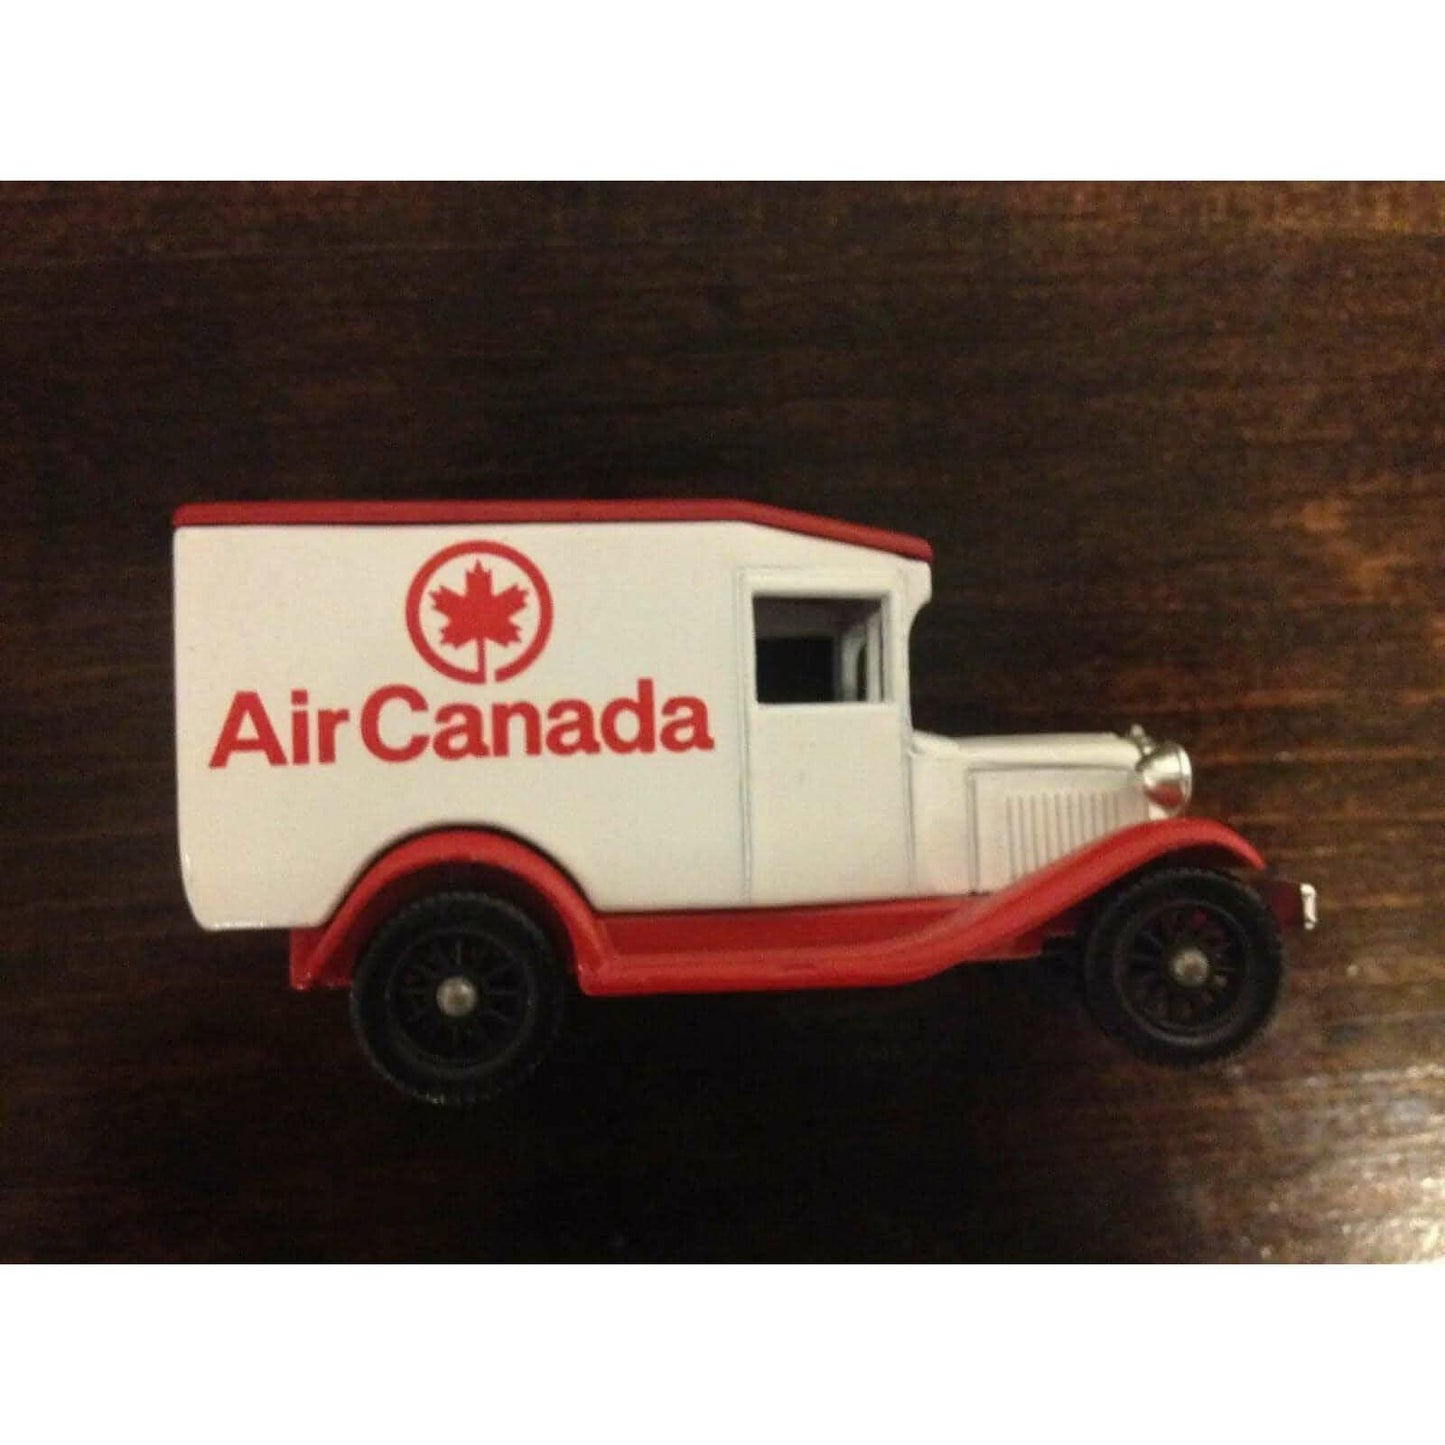 Air Canada Courier Van BooksCardsNBikes